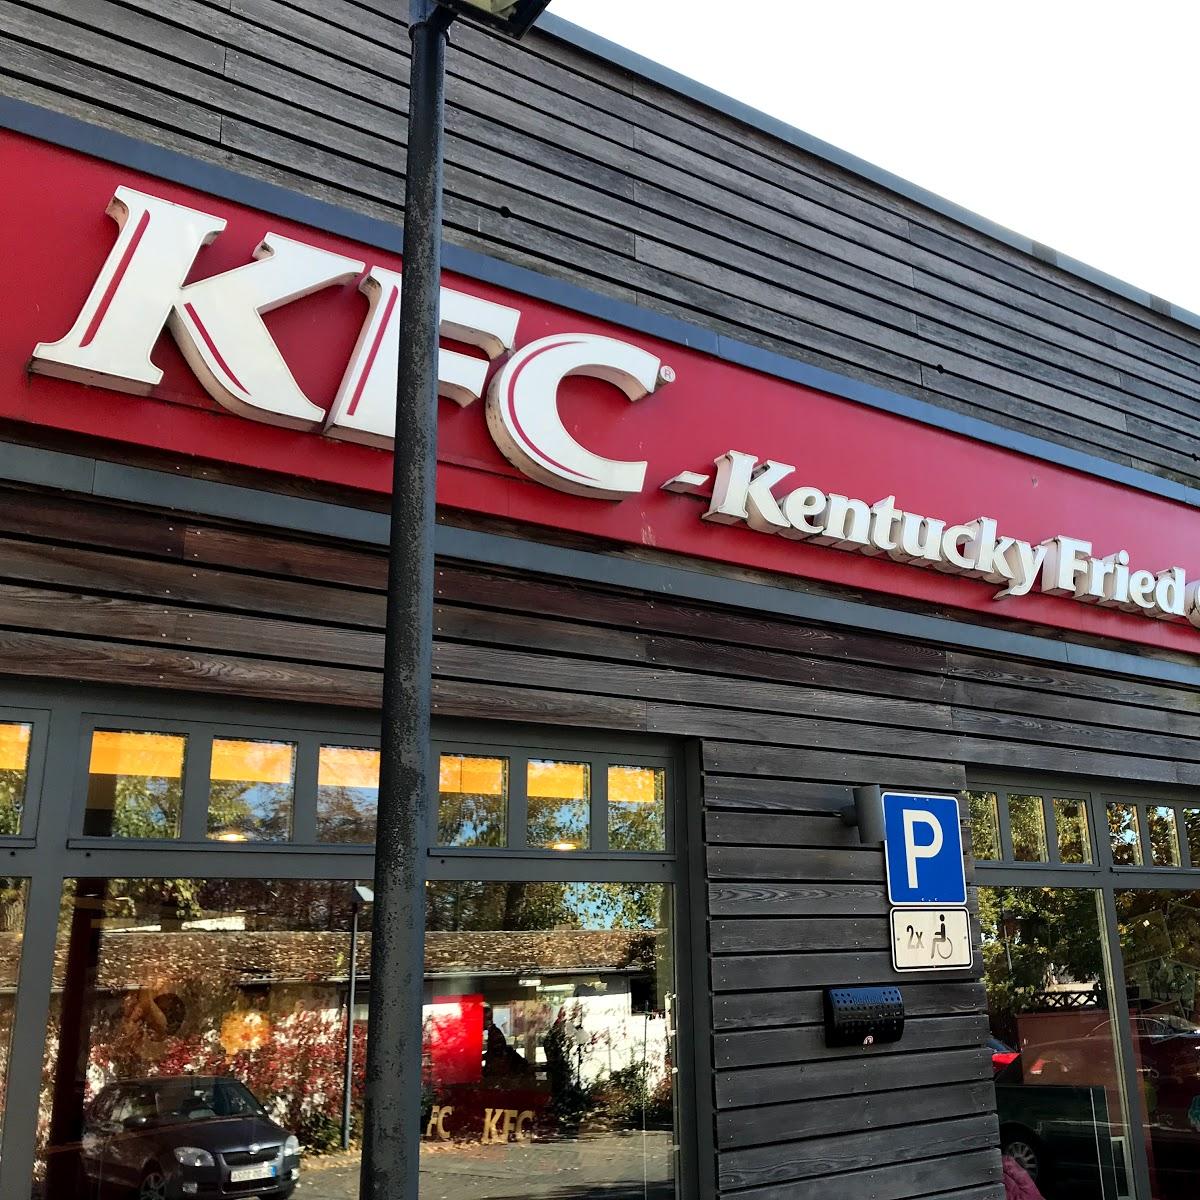 Restaurant "Kentucky Fried Chicken" in Berlin